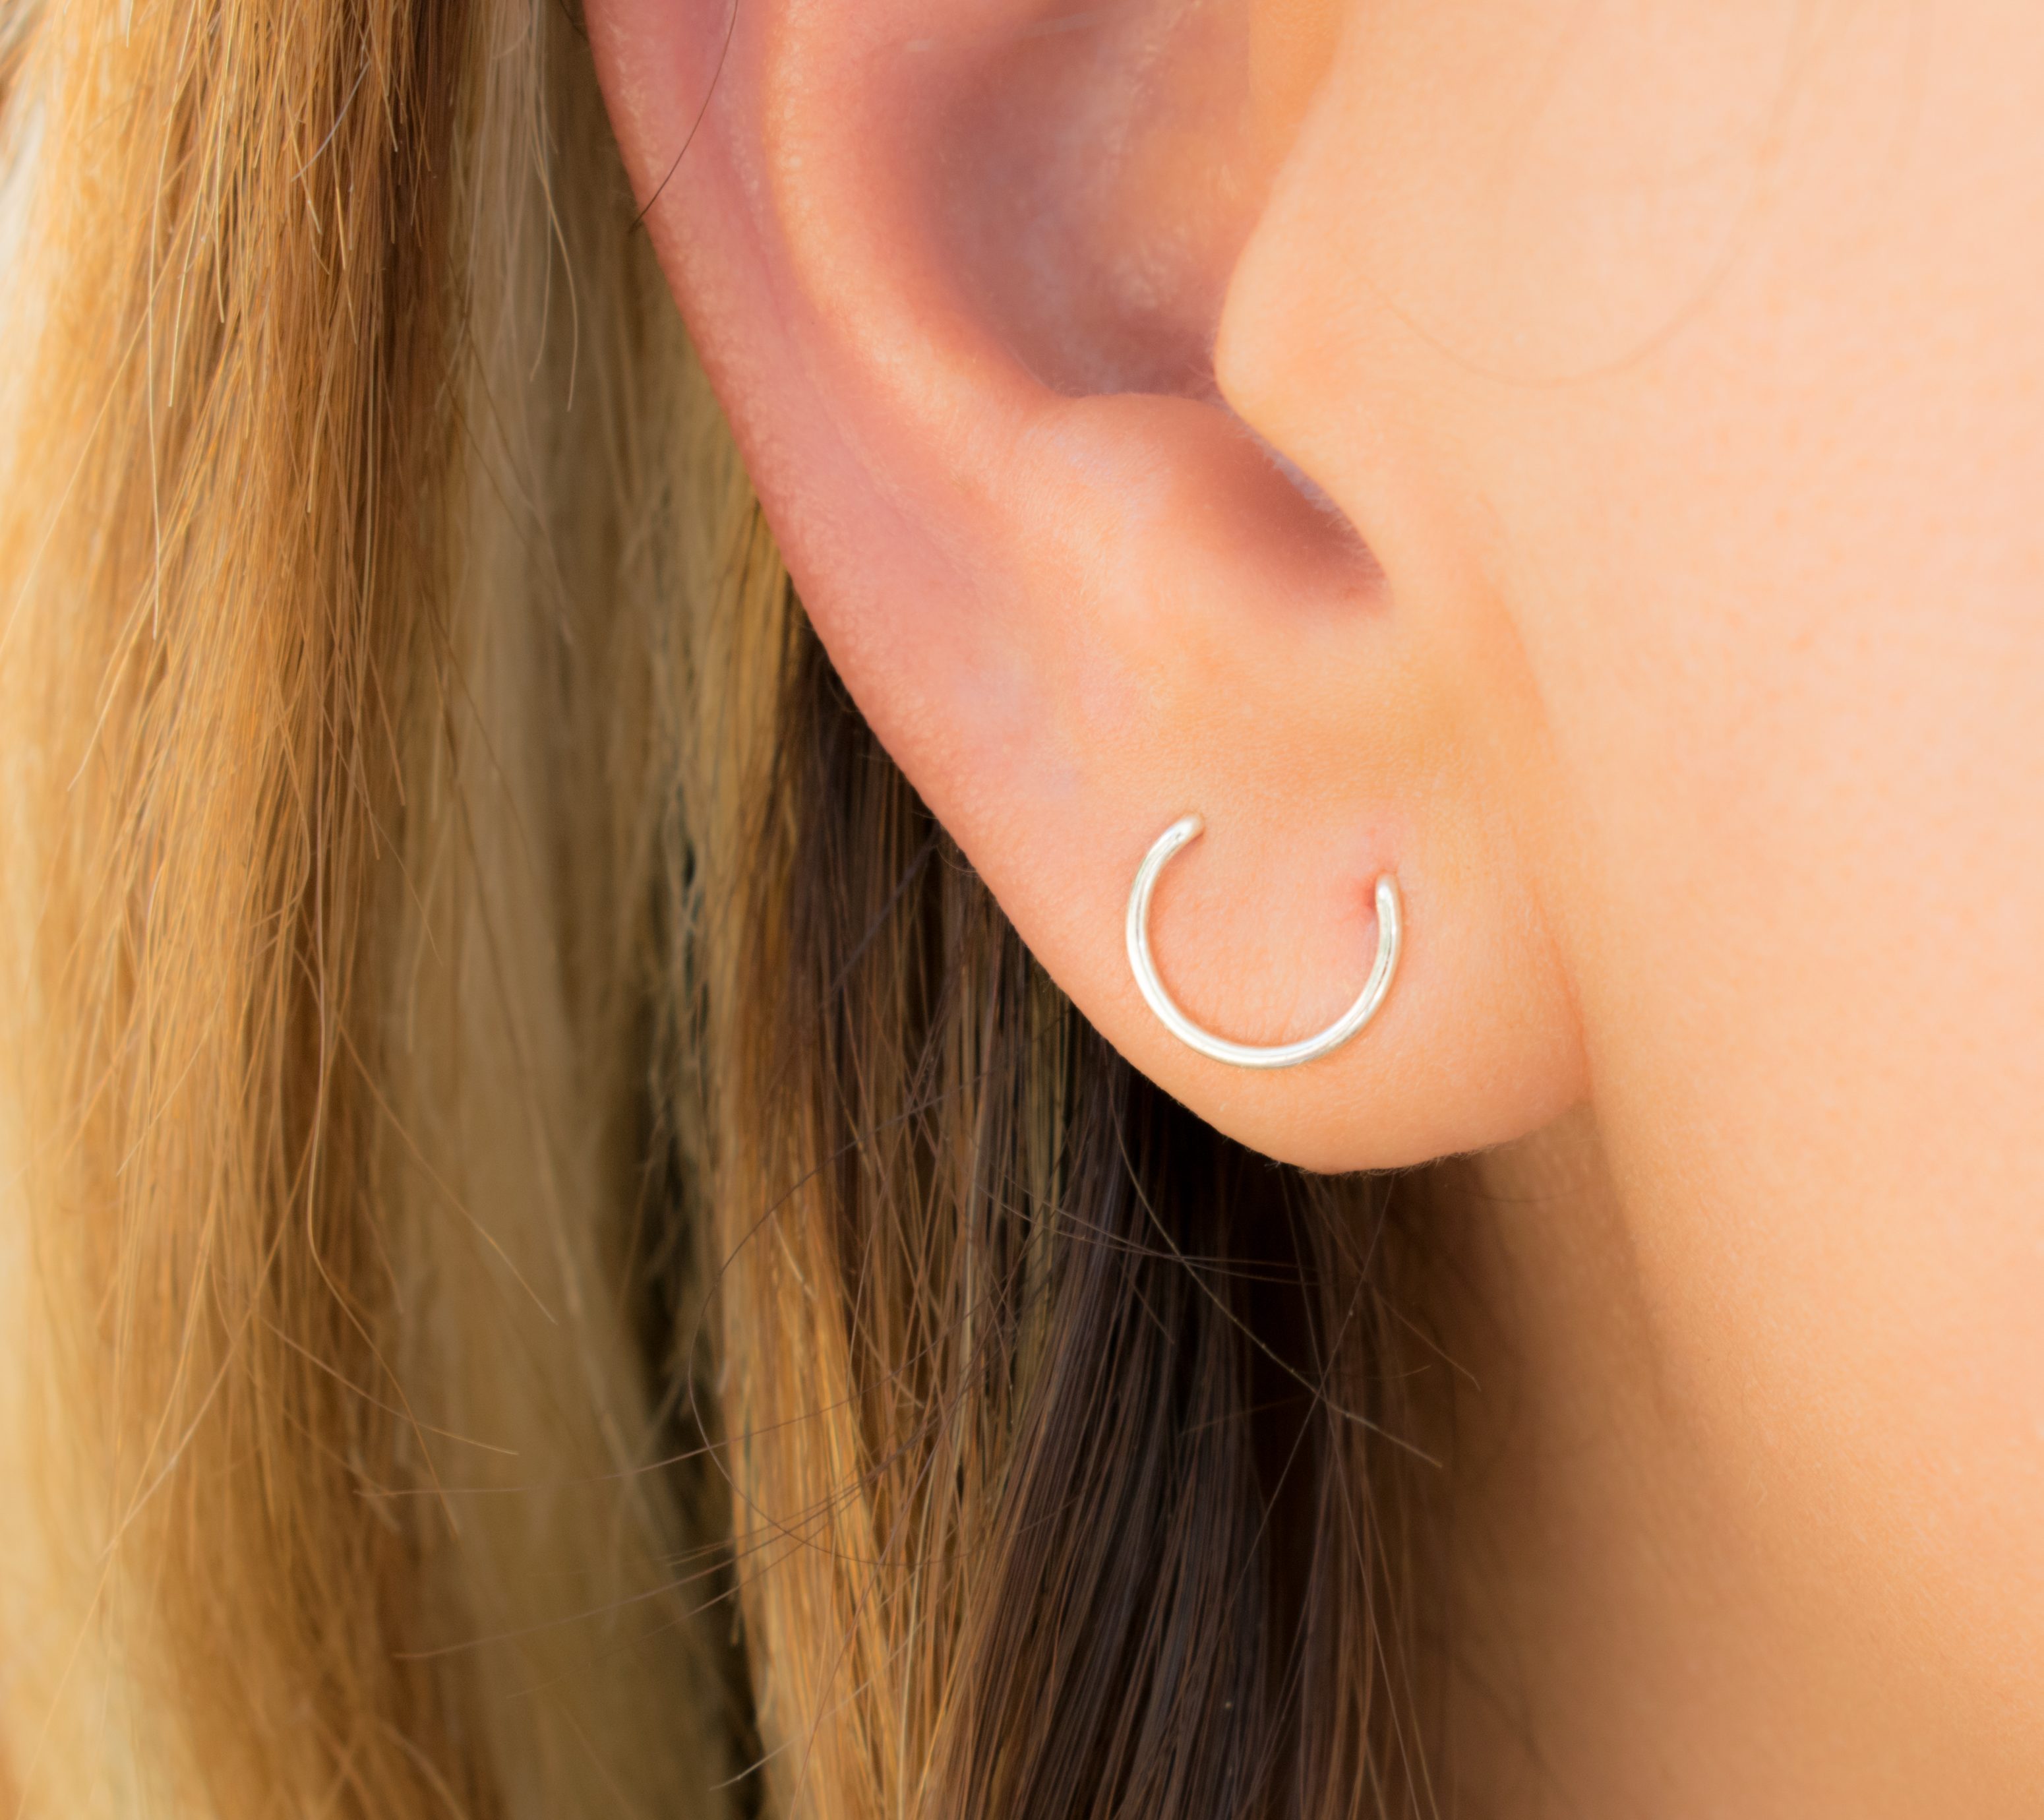 piercing earrings